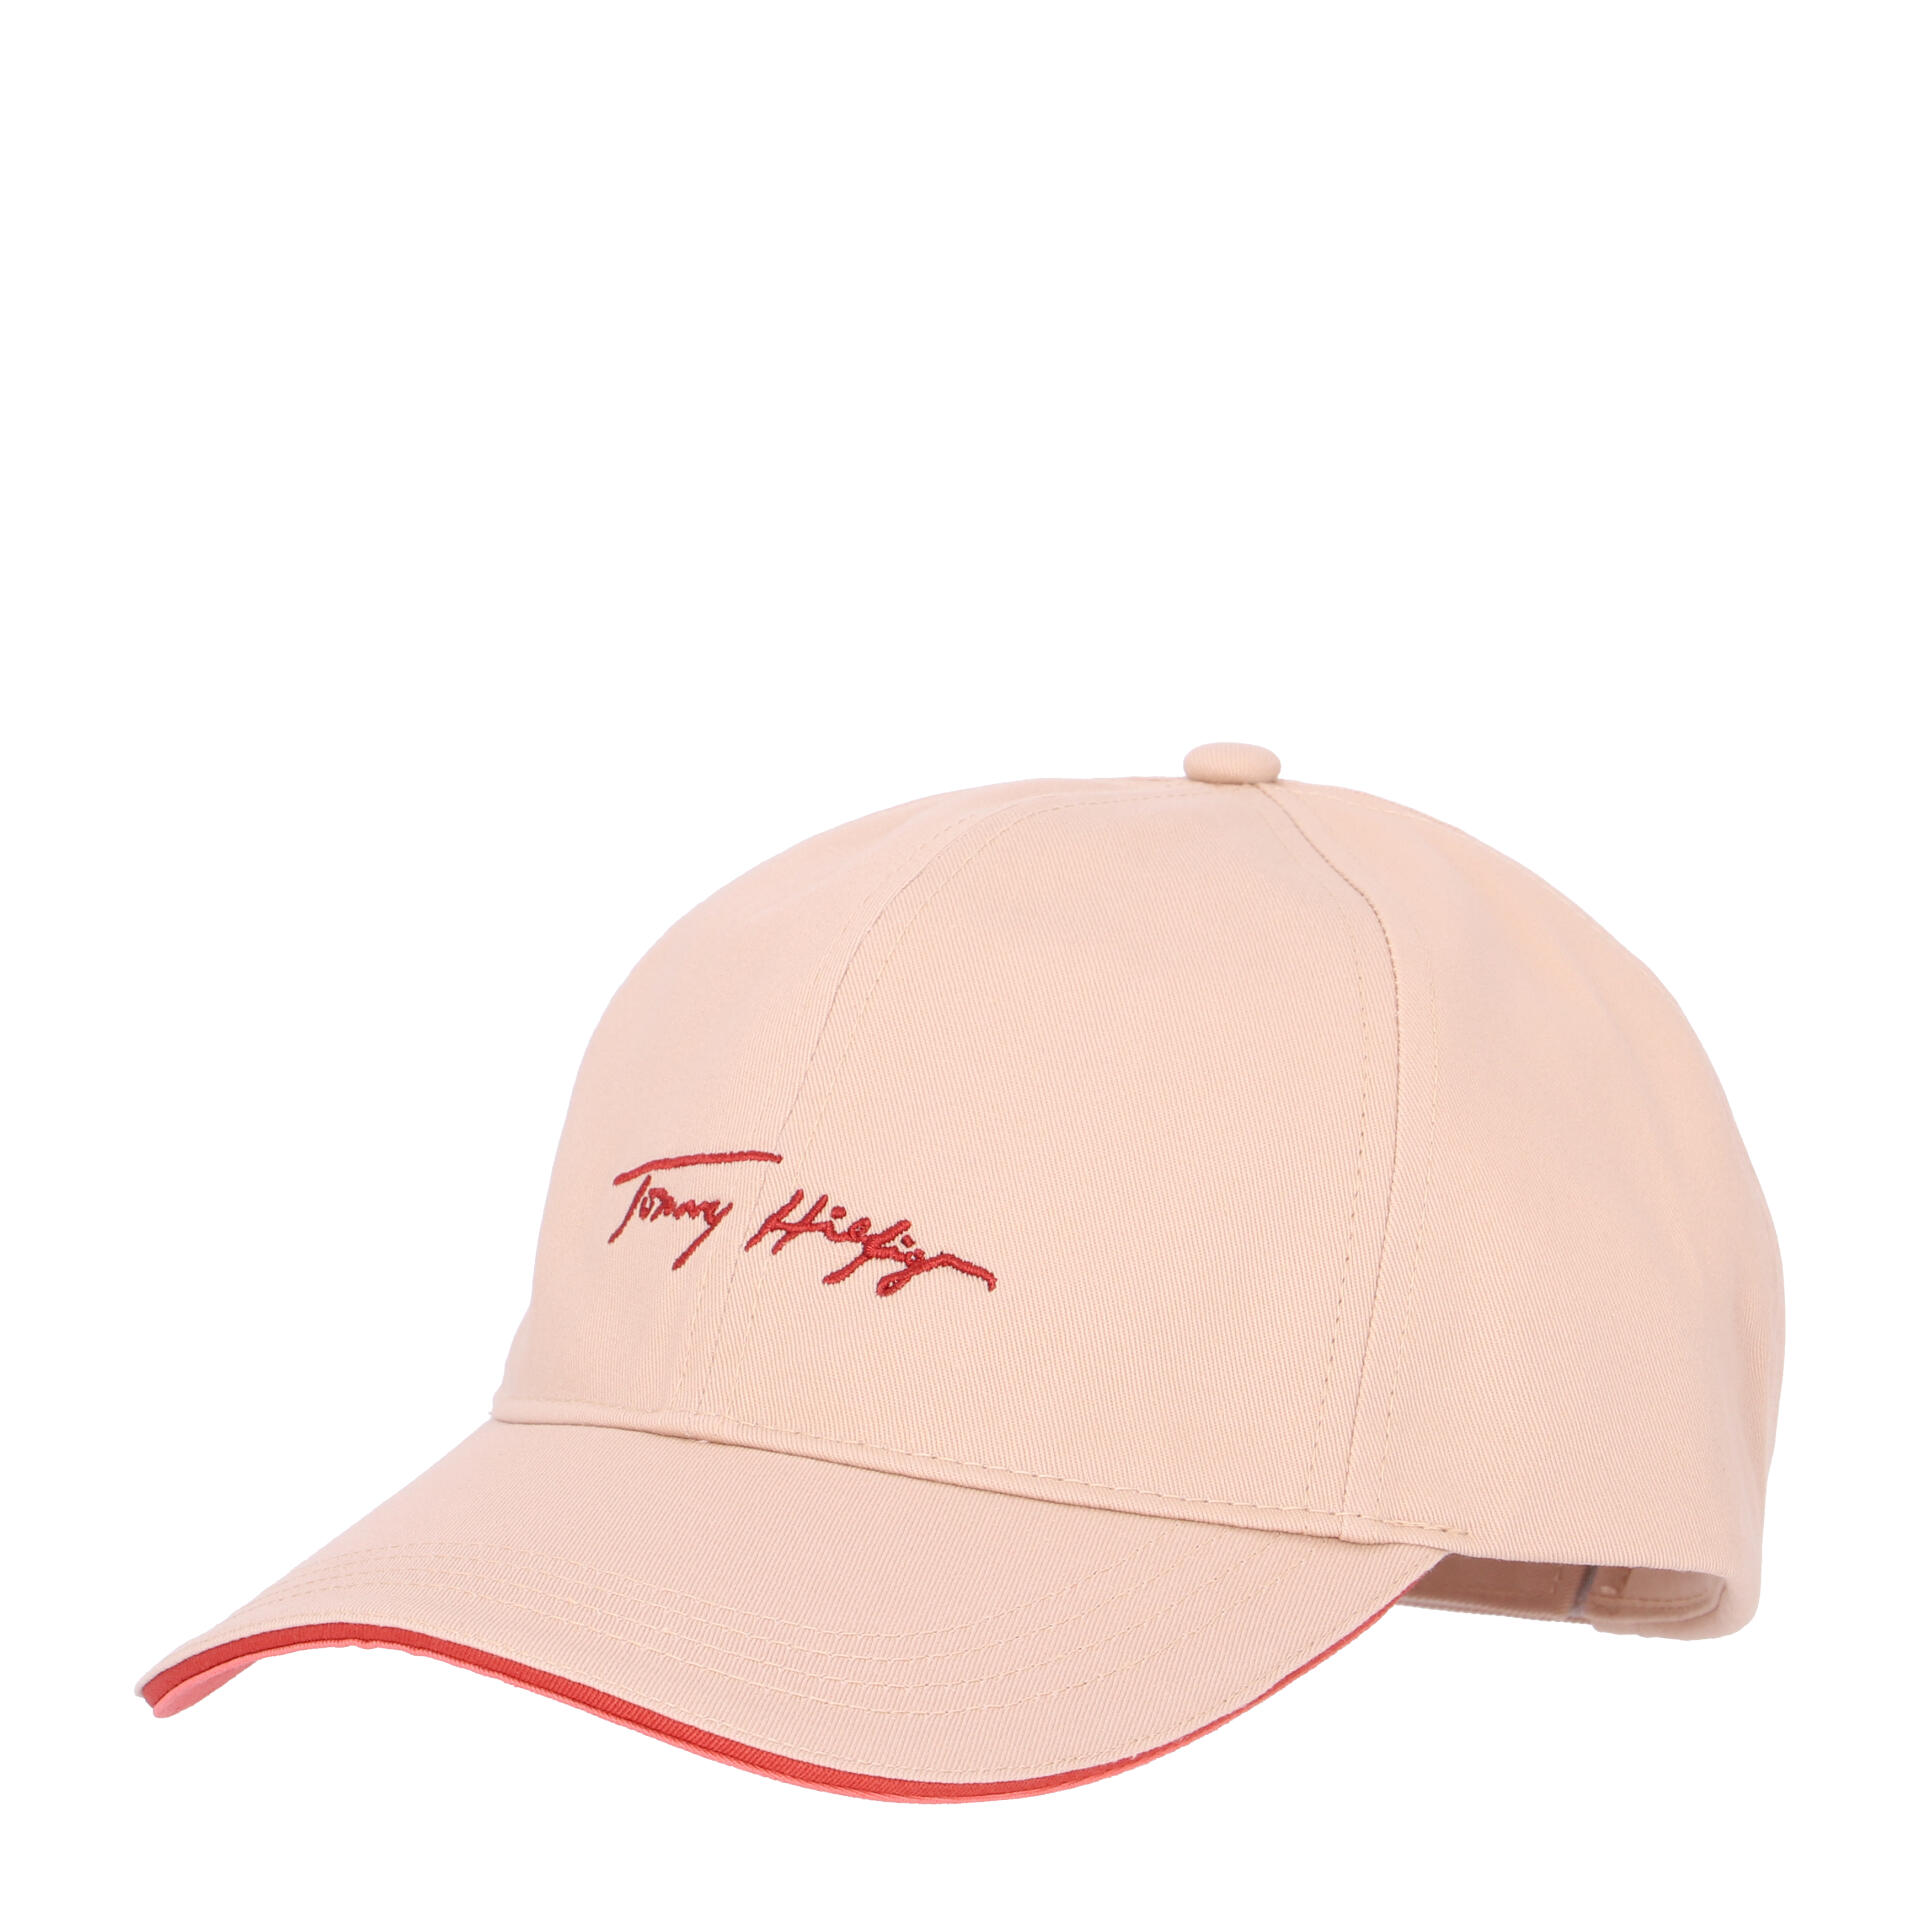 Tommy Hilfiger Iconic Signature Cap sandrift